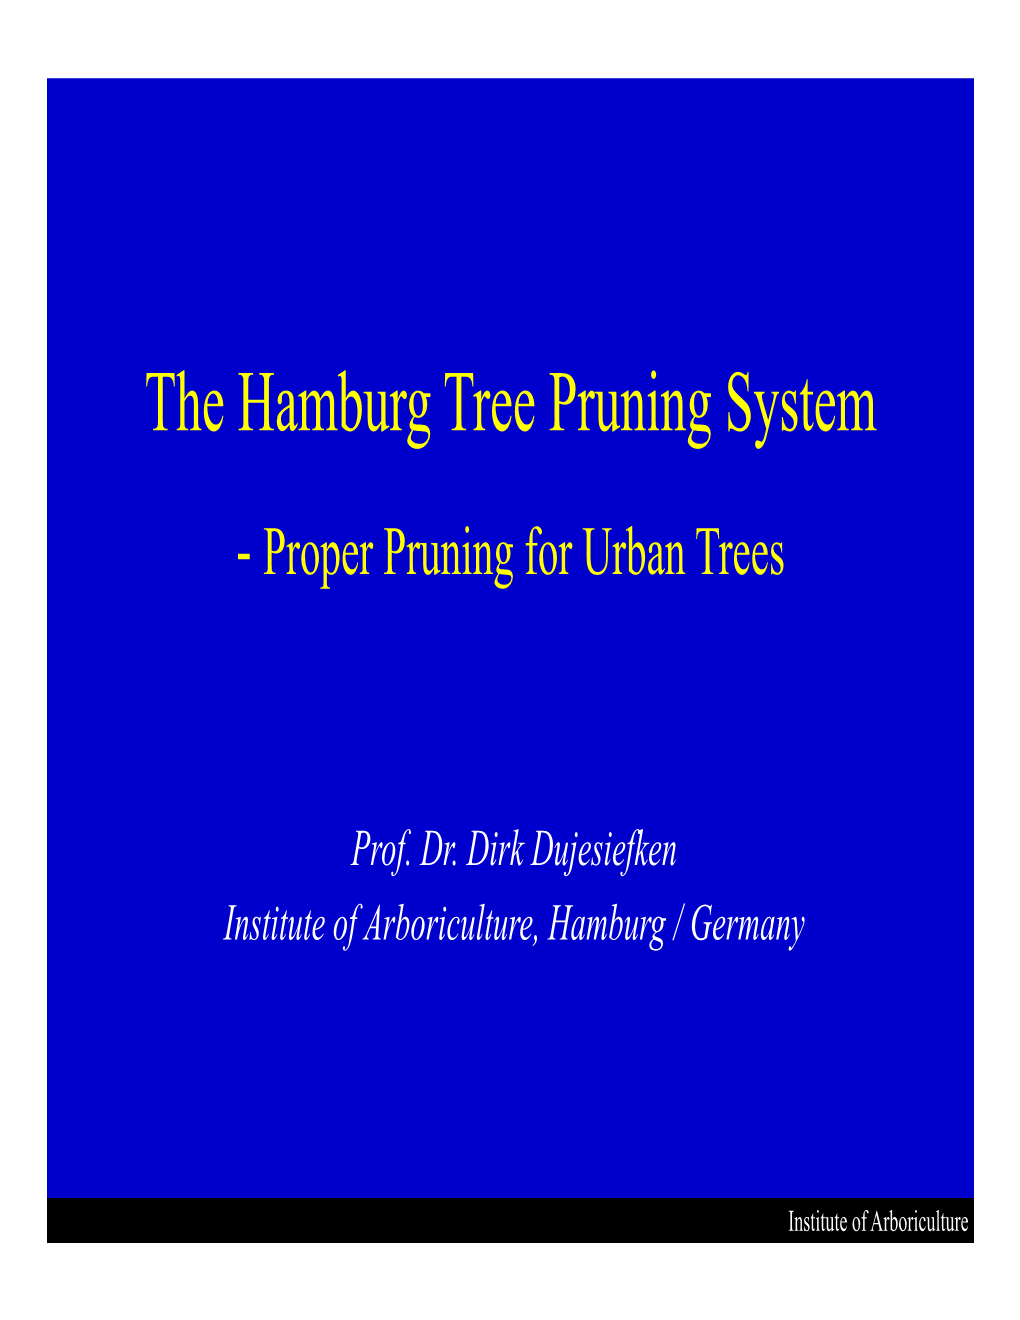 The Hamburg Tree Pruning System